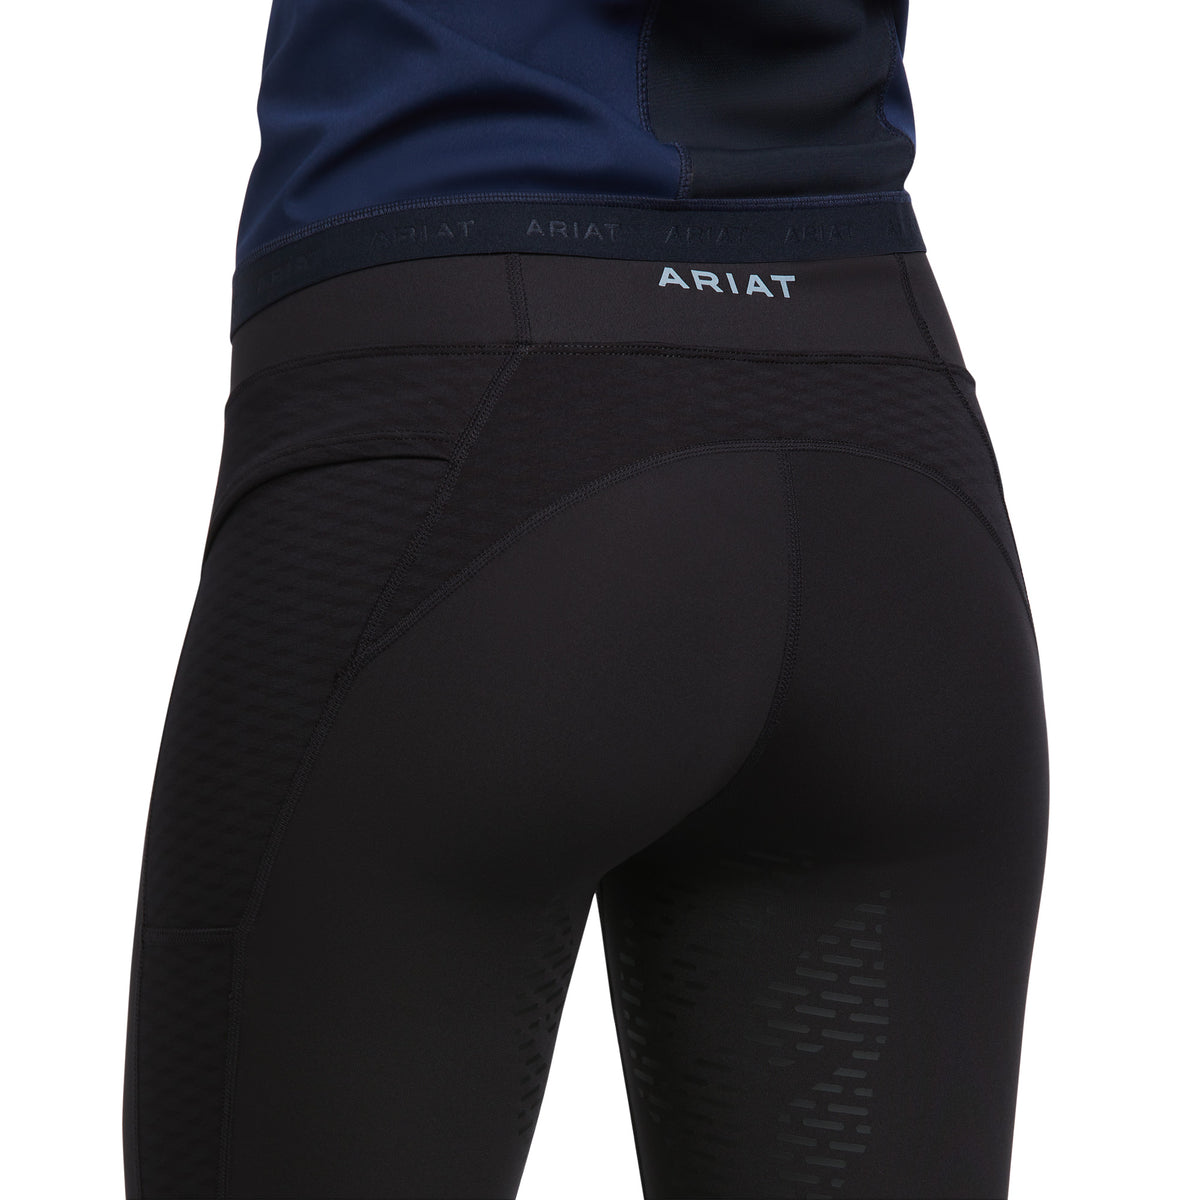 Ariat Womens Ascent Half Grip Tight -Black